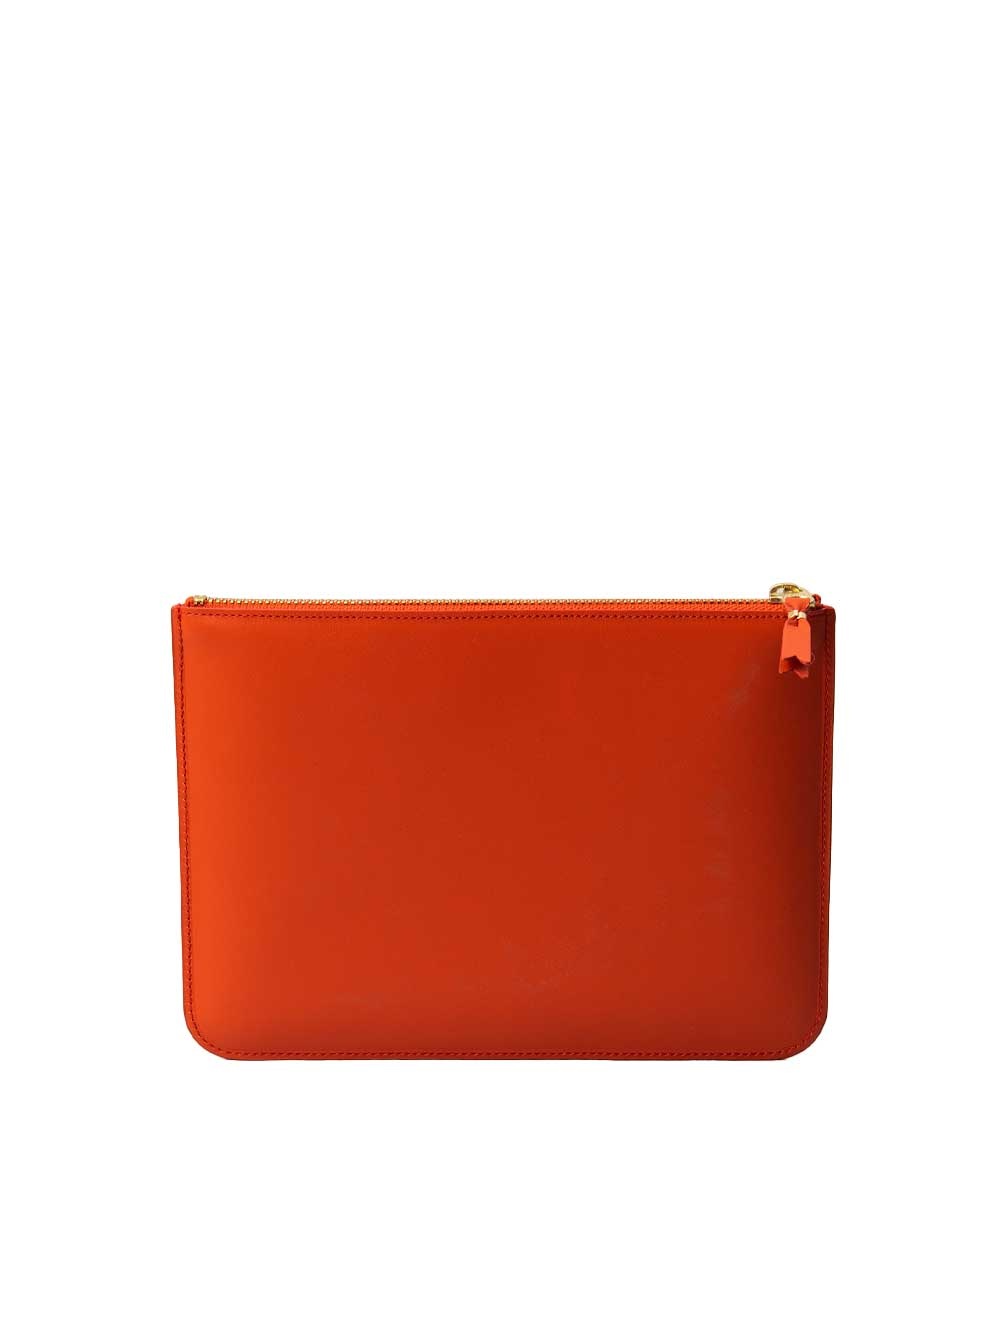 Clutch Bag In Orange Special Edition - 2